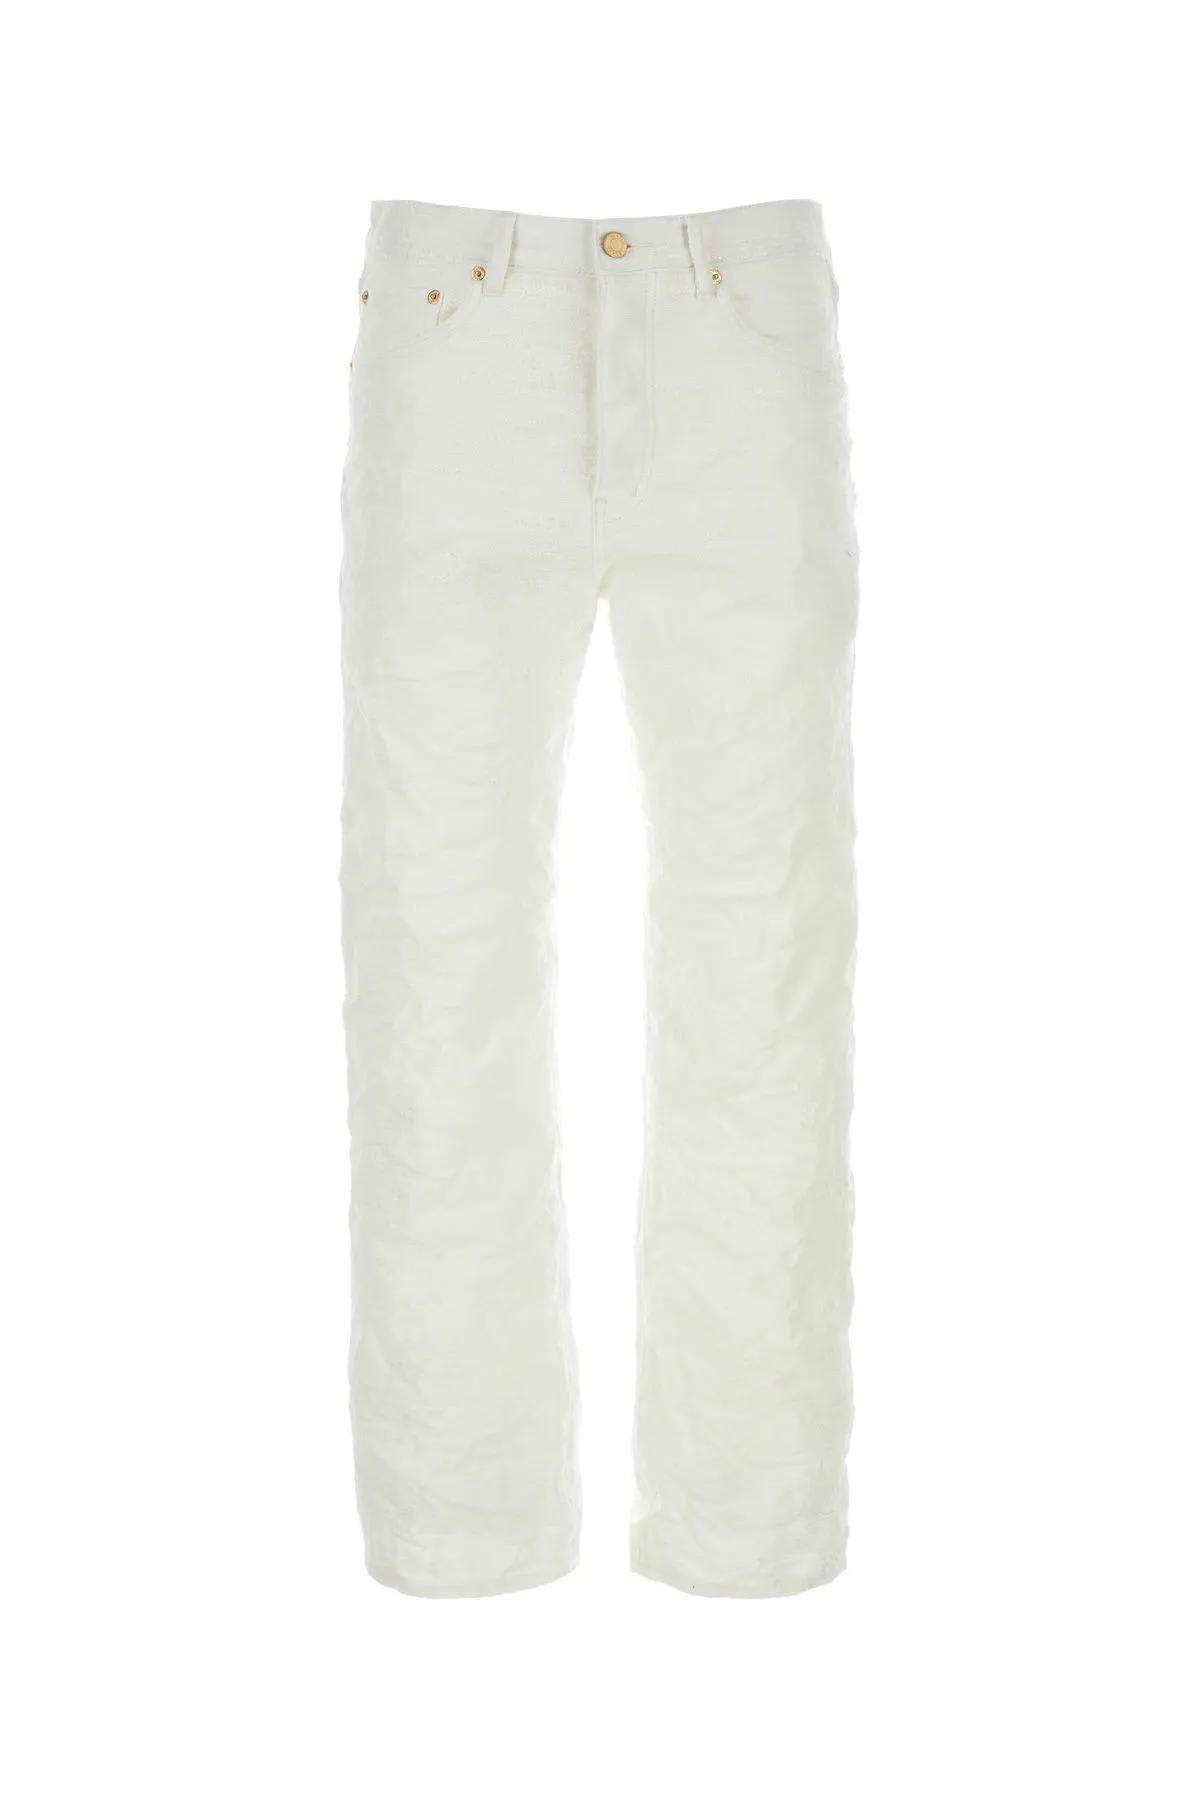 Shop Purple Brand White Denim Jeans